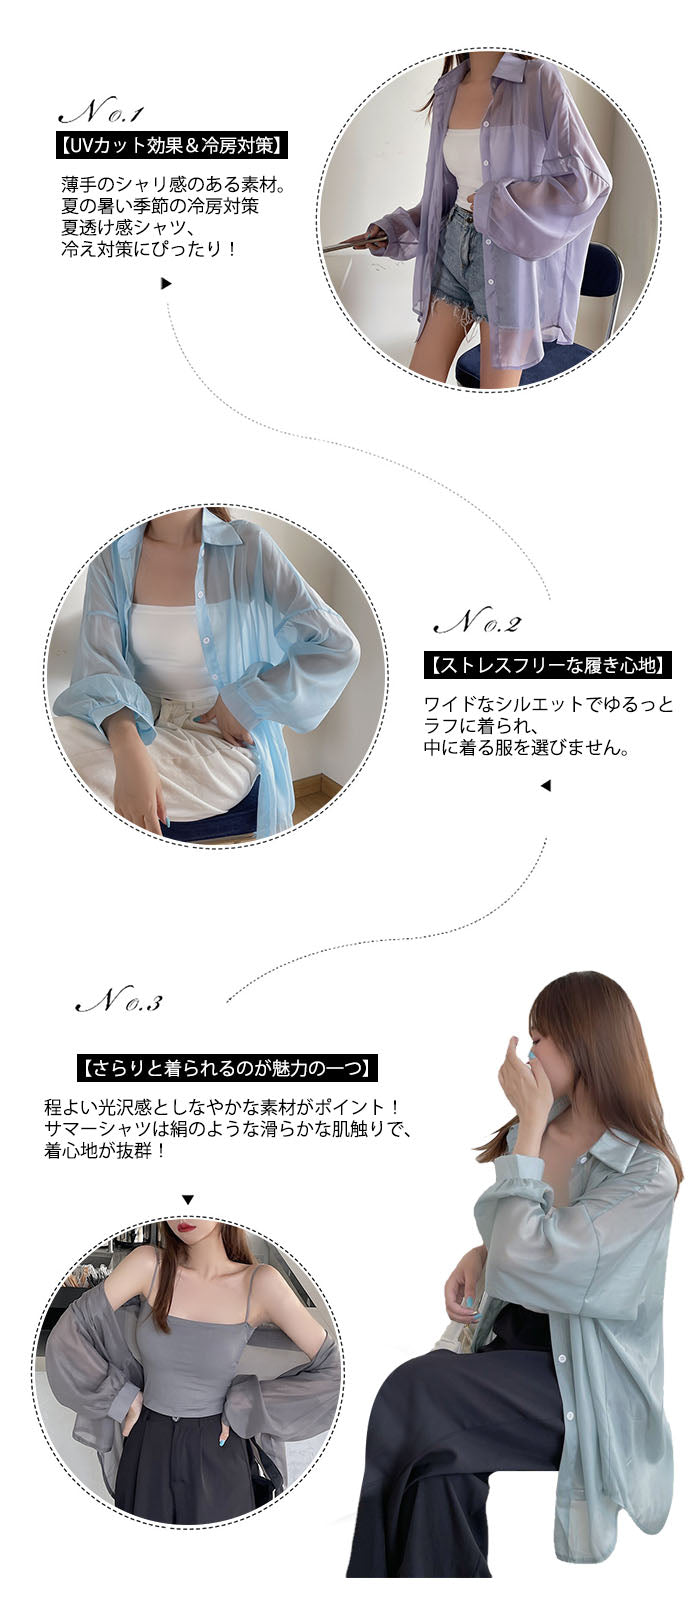 UVカット シャツ シアーシャツ 薄手 接触冷感 プルオーバー レディース yx1188